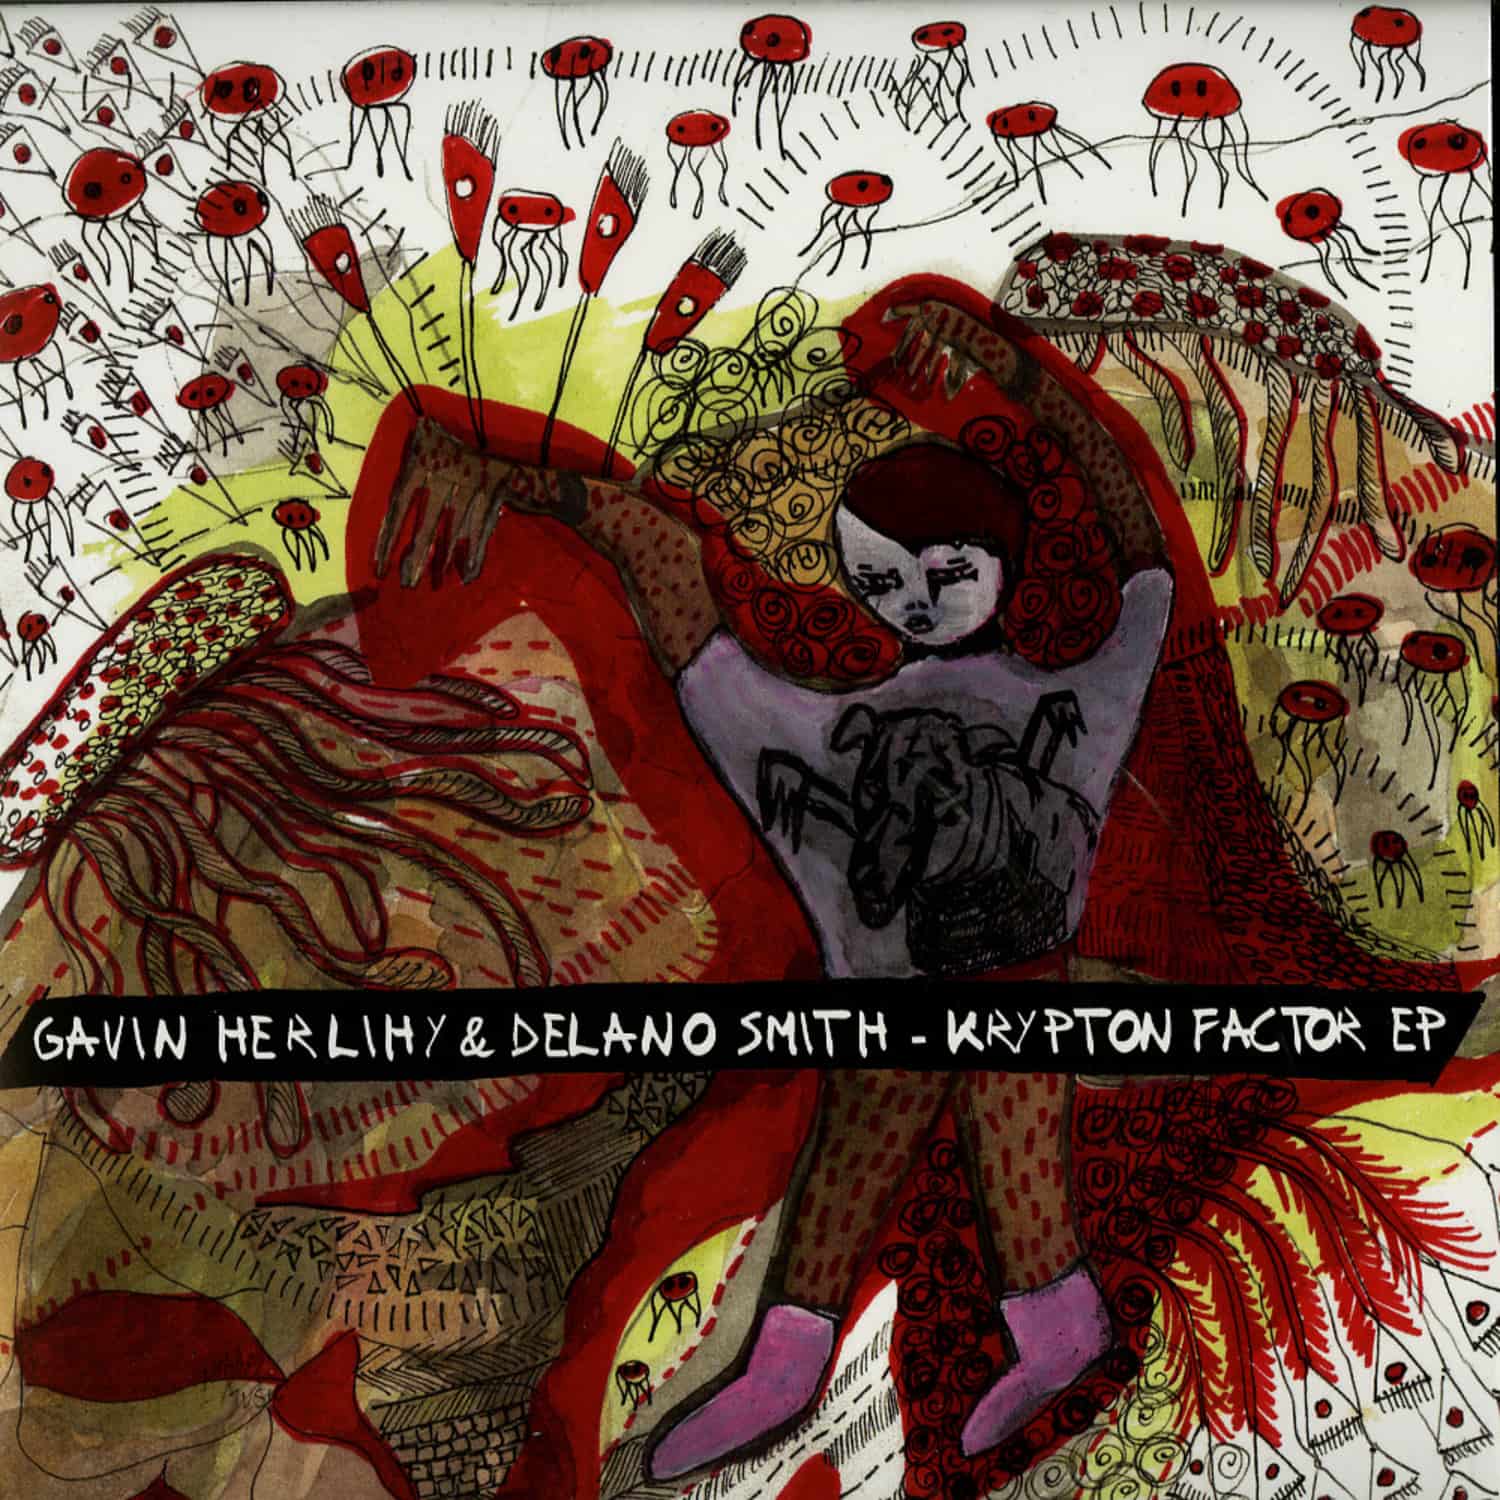 Gavin Herlihy & Delano Smith - KRYPTON FACTOR EP